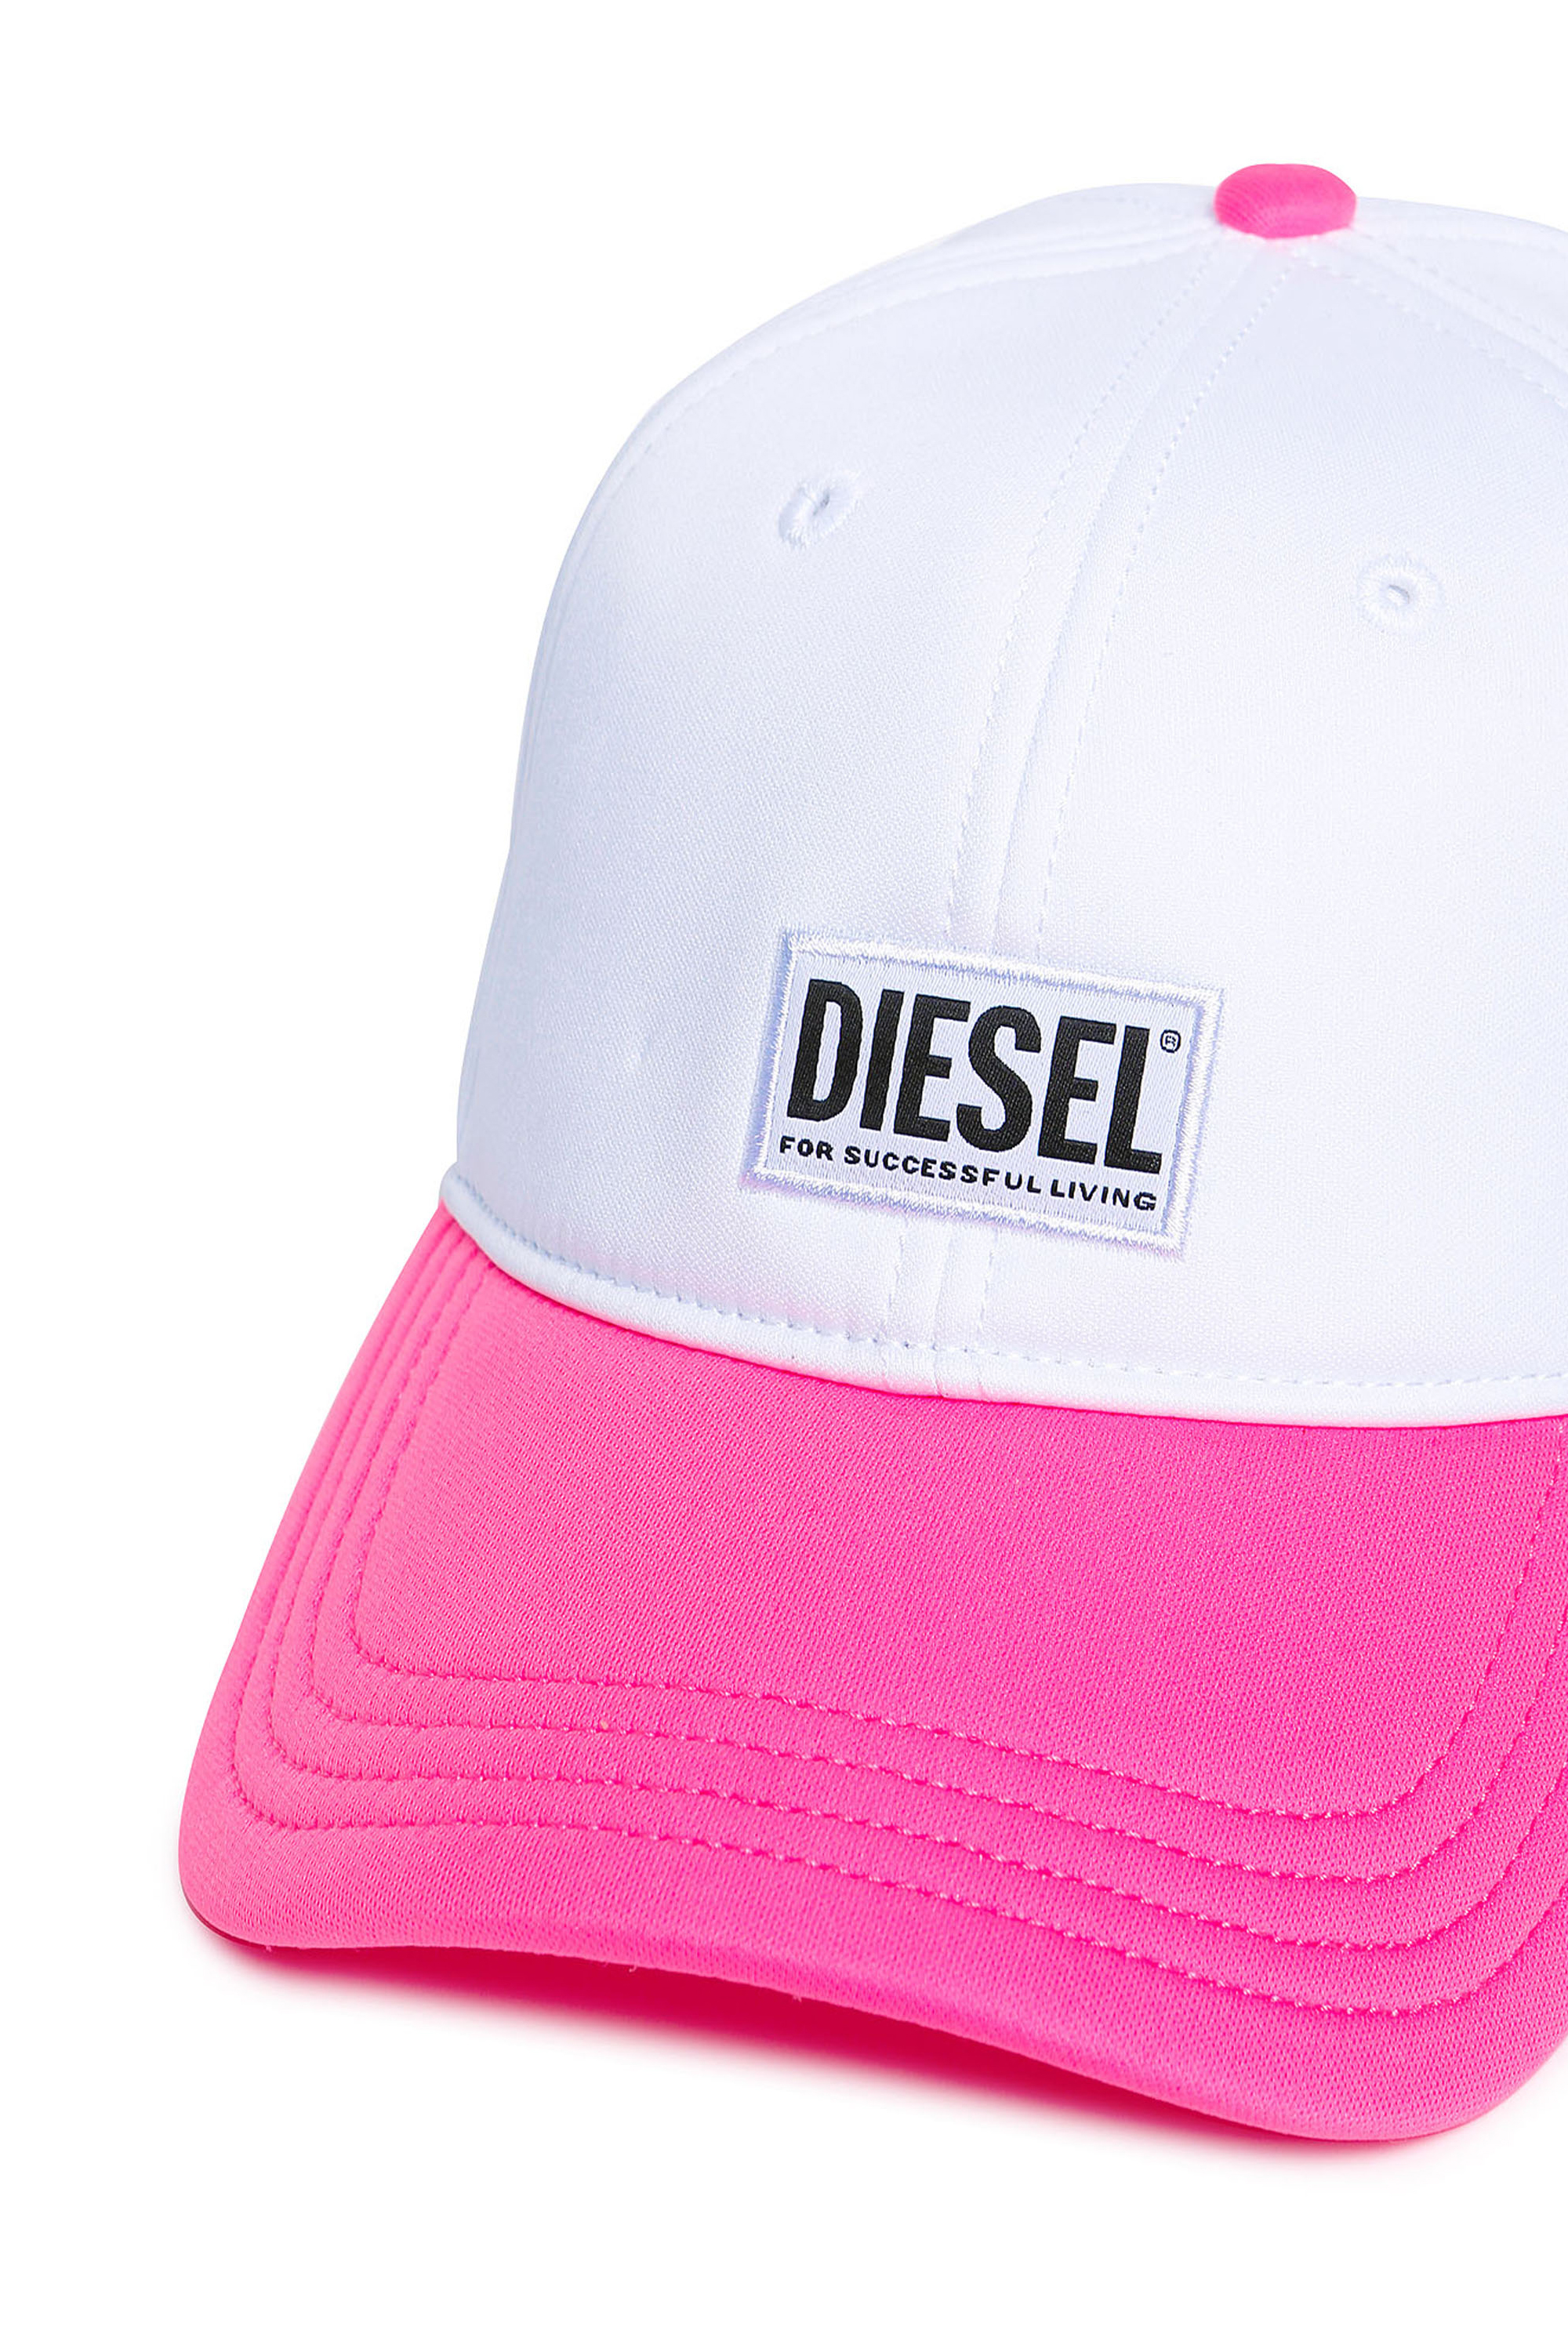 Diesel - FDURBO, Bianco/Rosa - Image 3